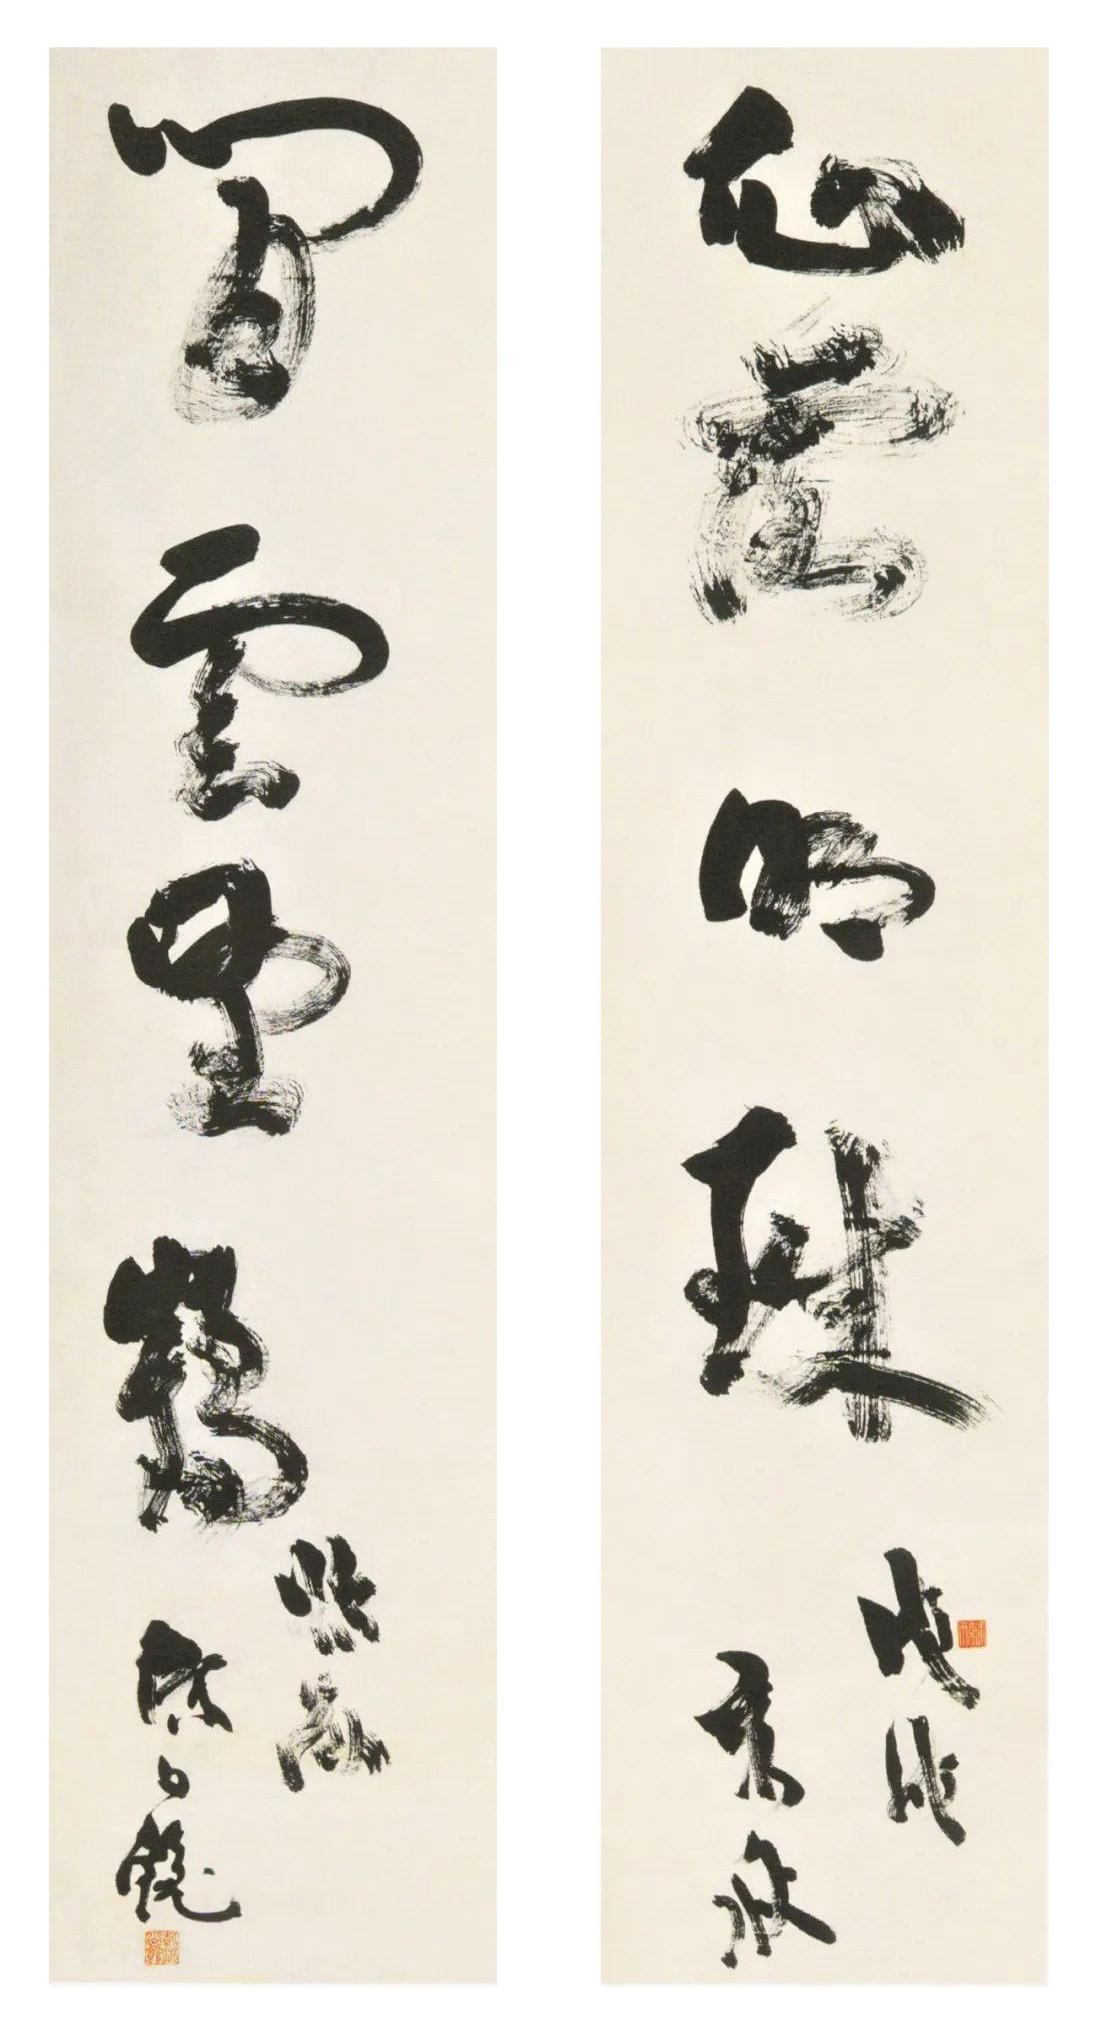 Calligraphie de Xu Wenjing presque aveugle